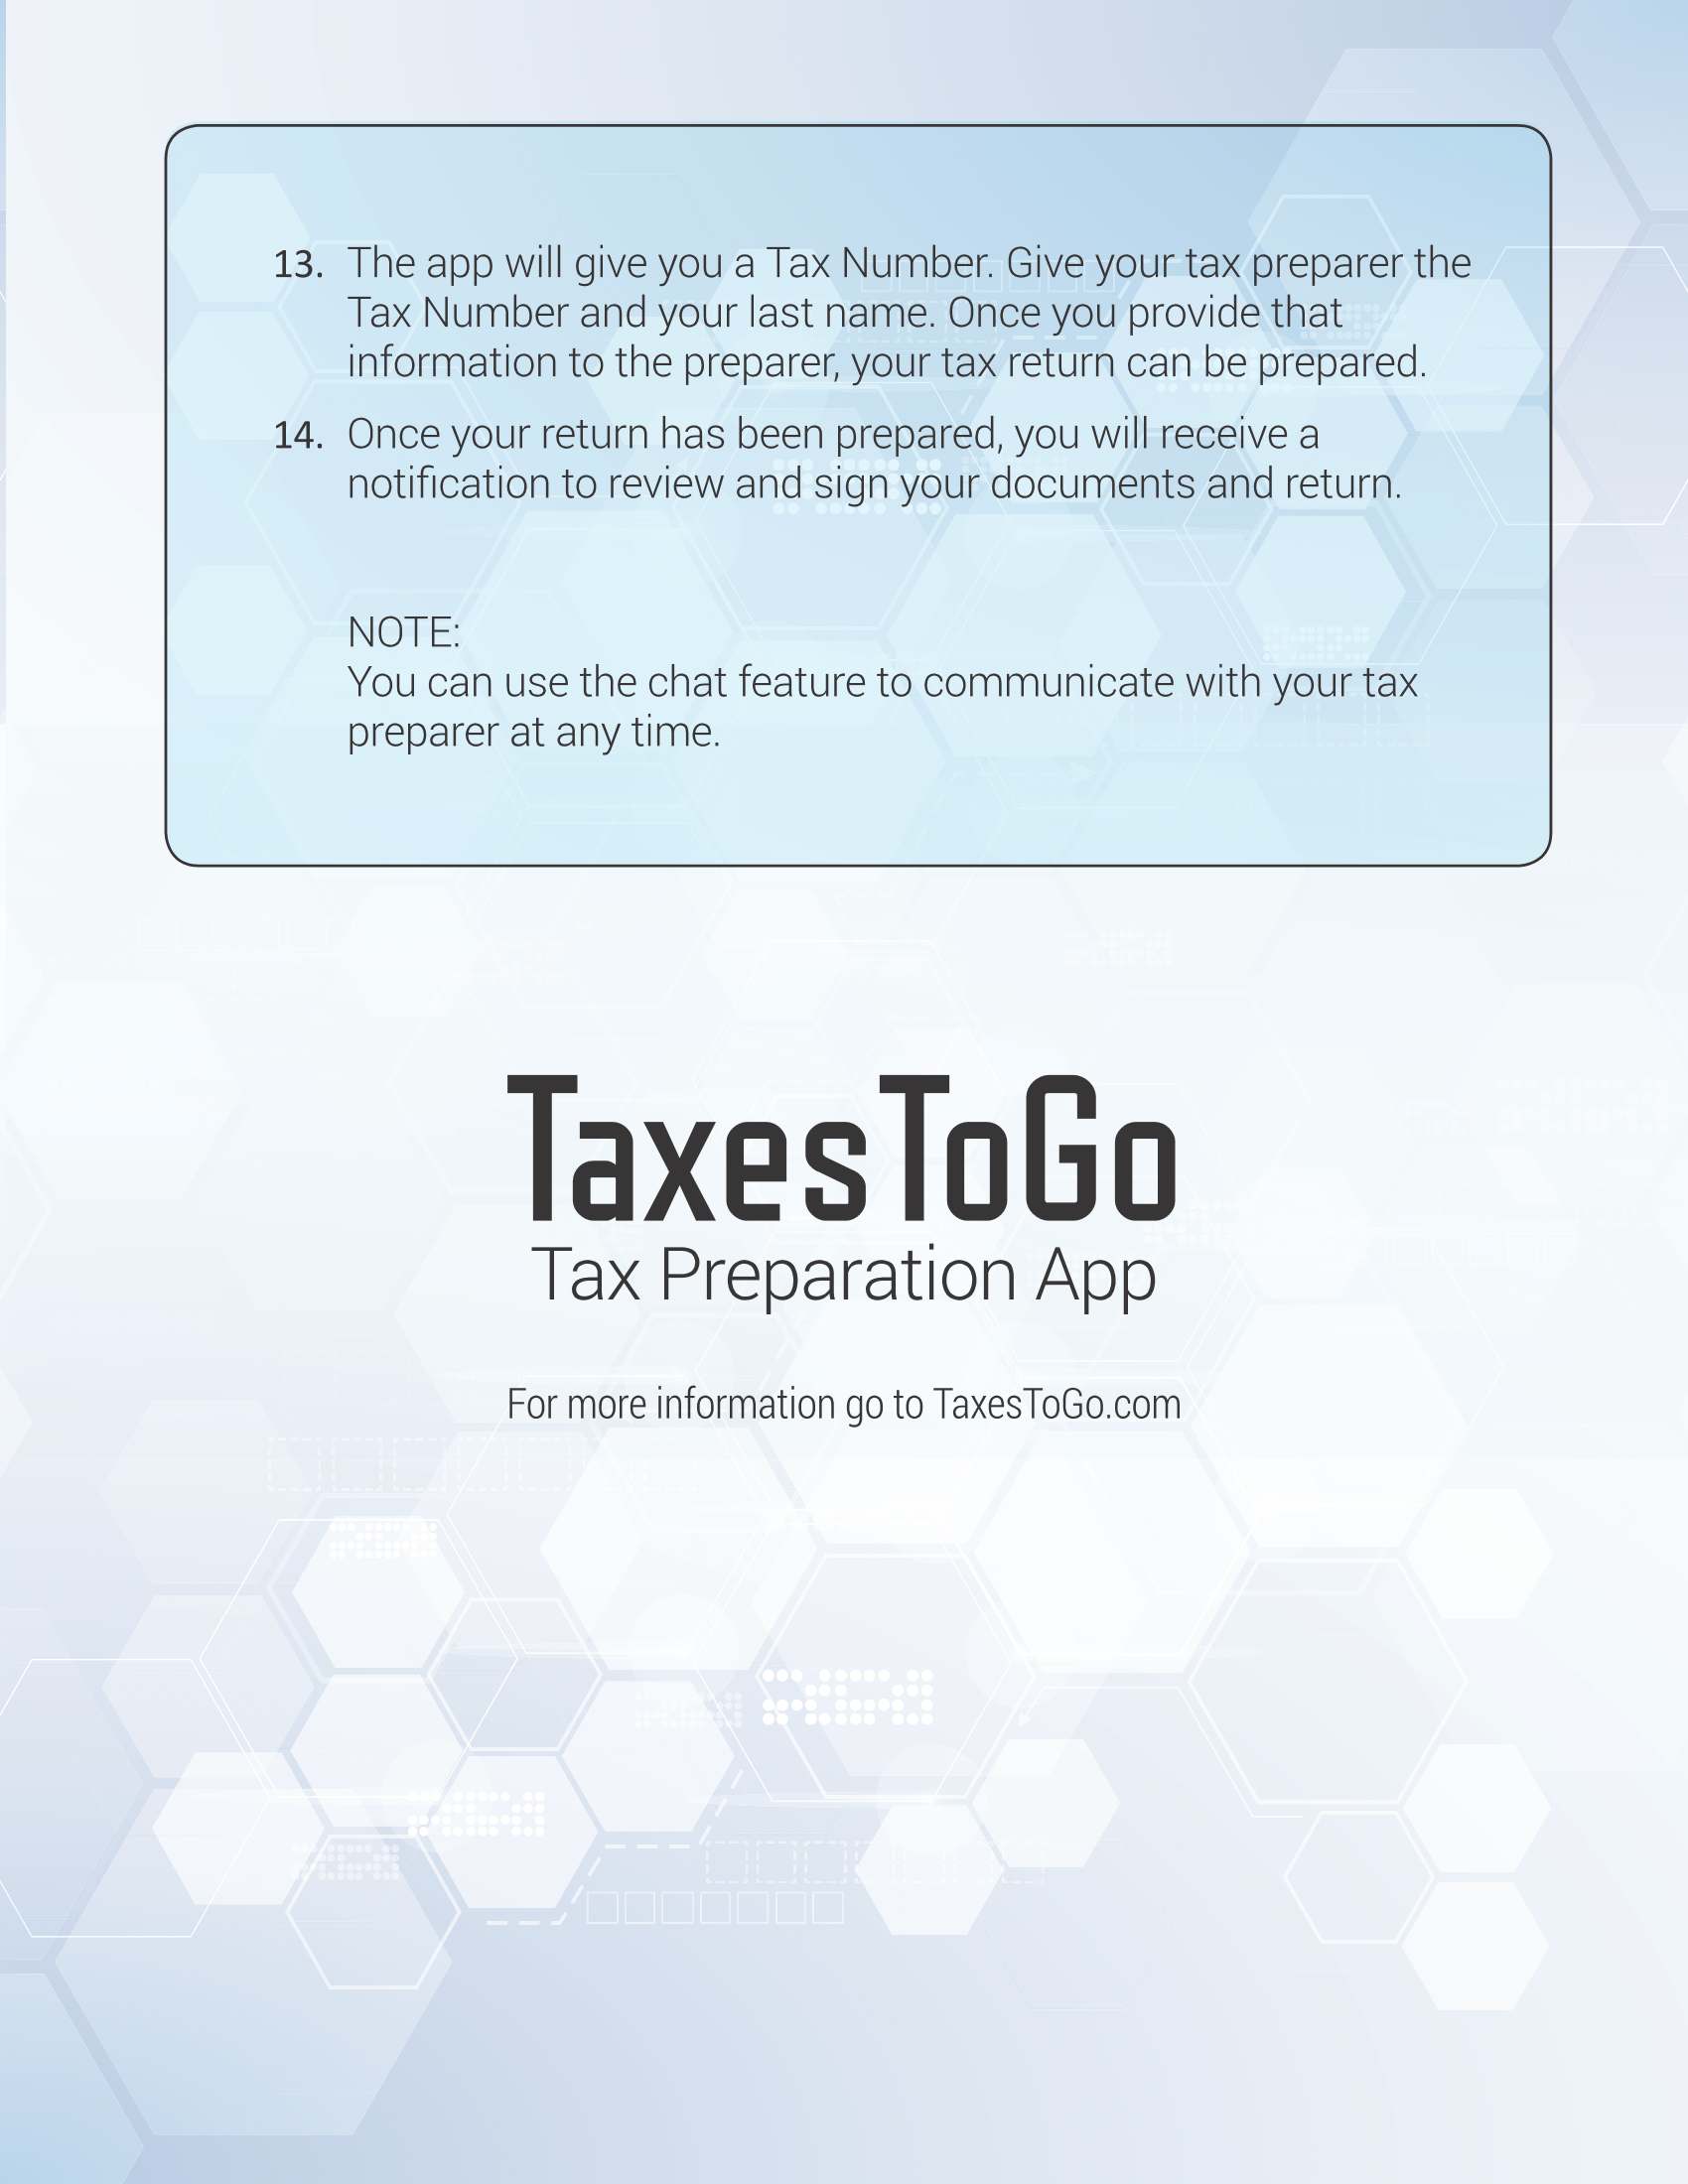 TaxesToGo Tax Preparation App